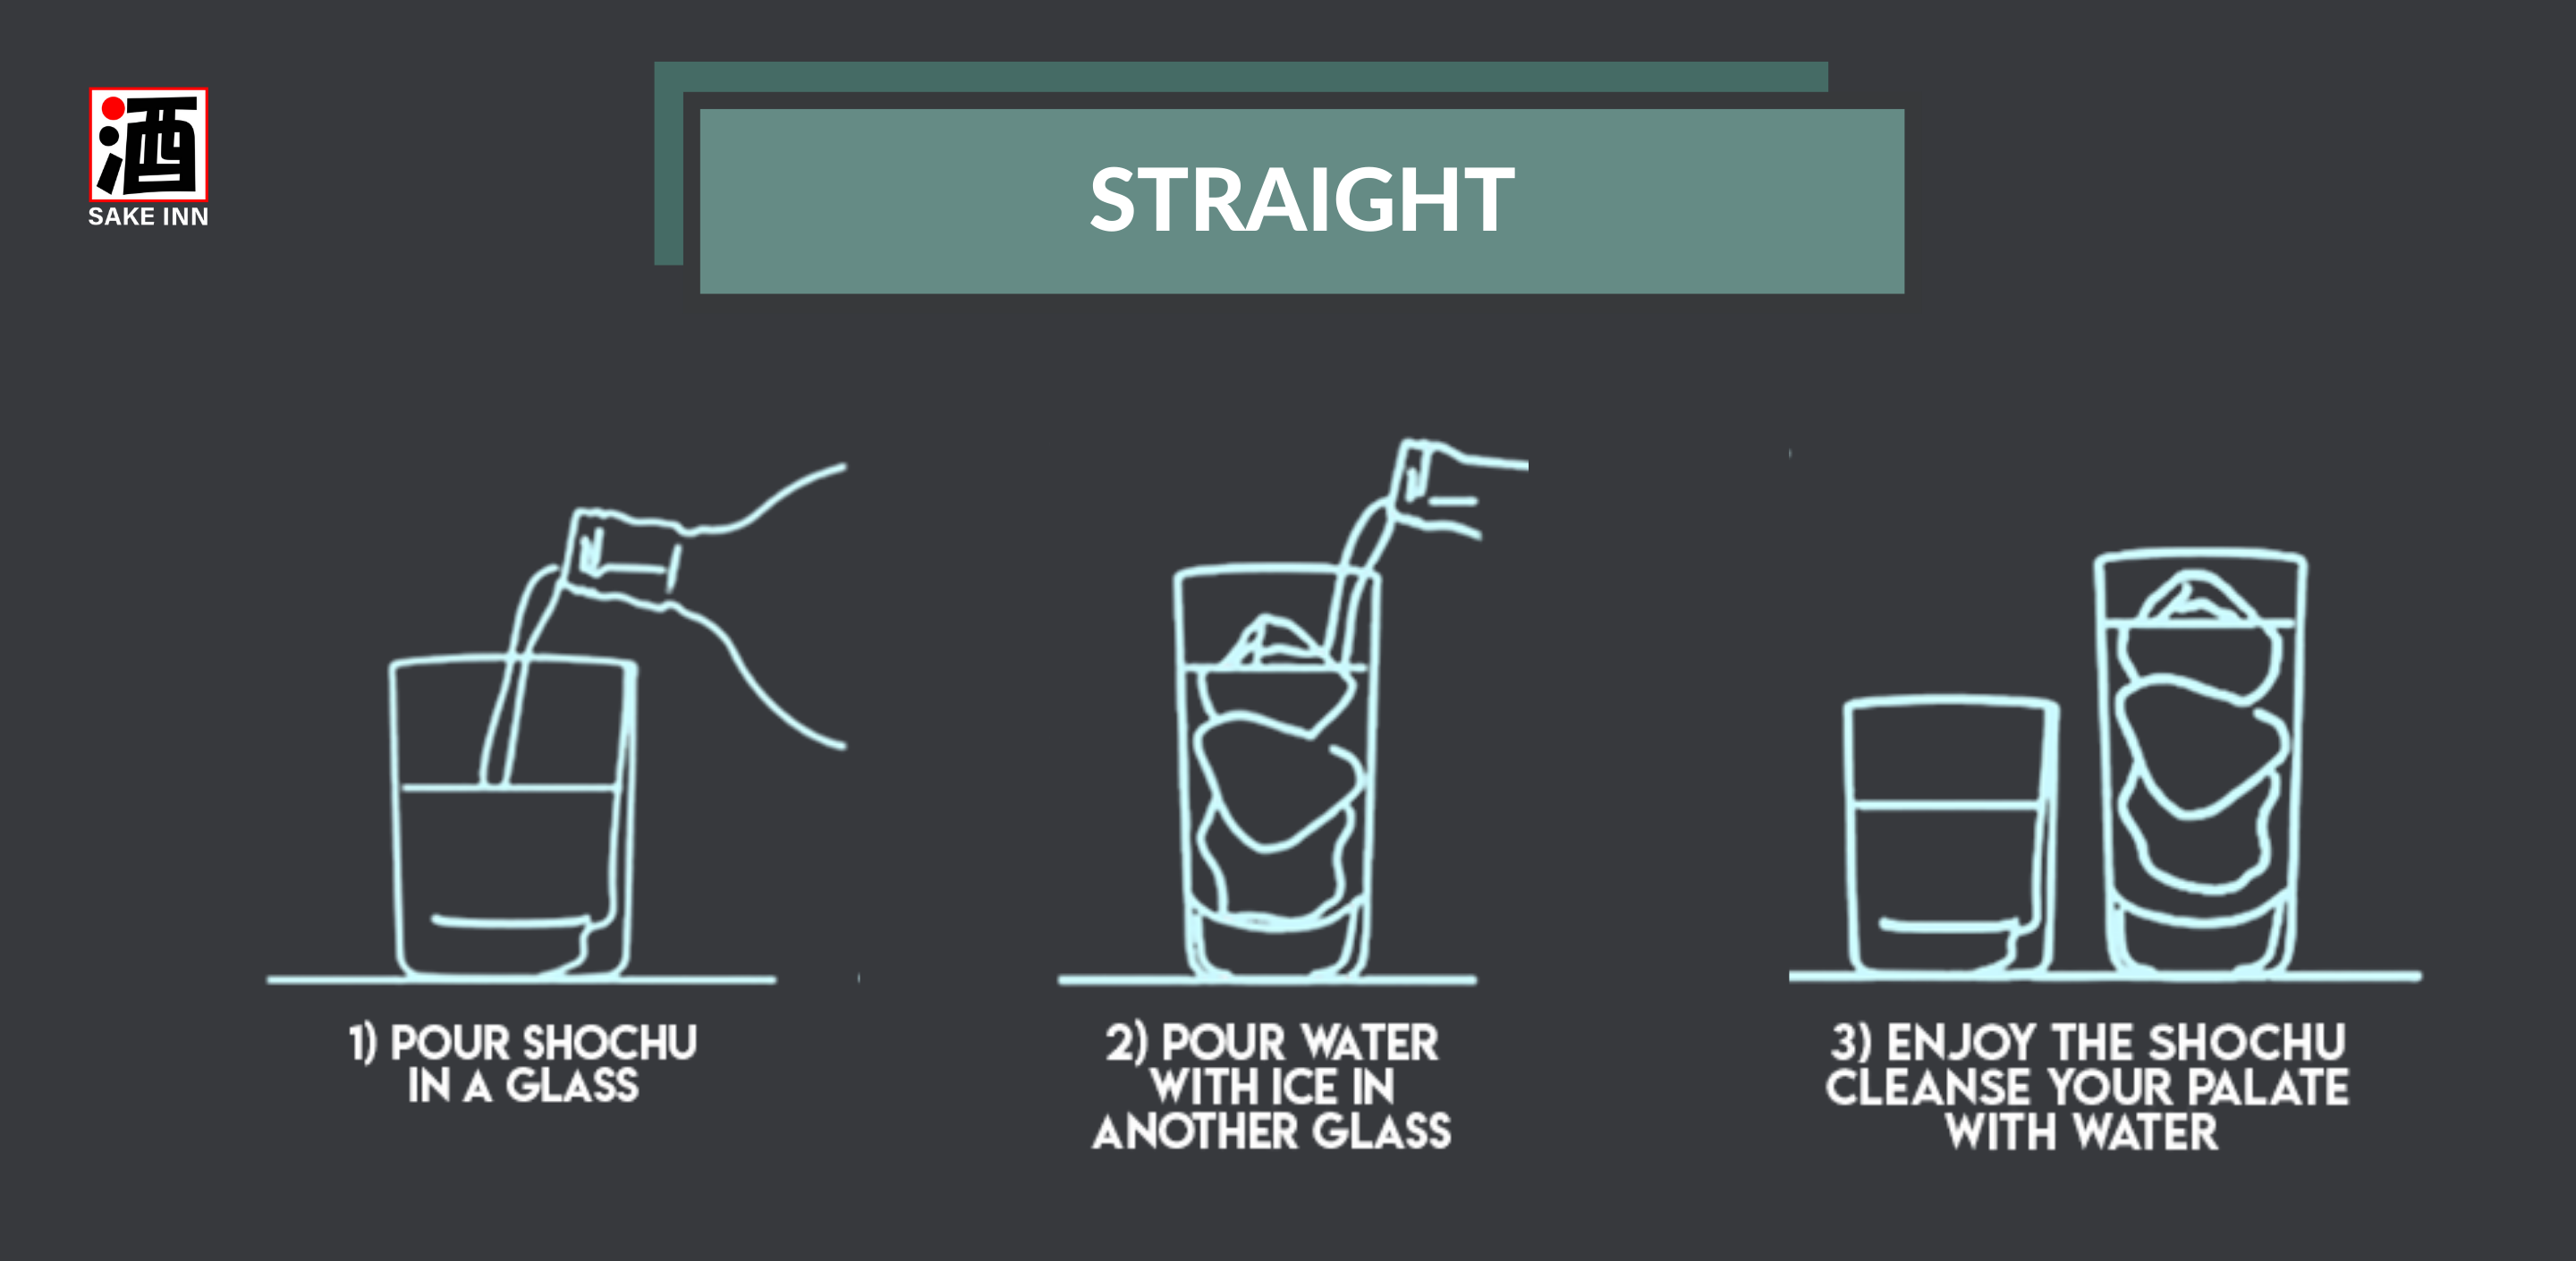 Sake Inn Japanese Shochu Beginner's Guide | Ways to drink shochu - straight